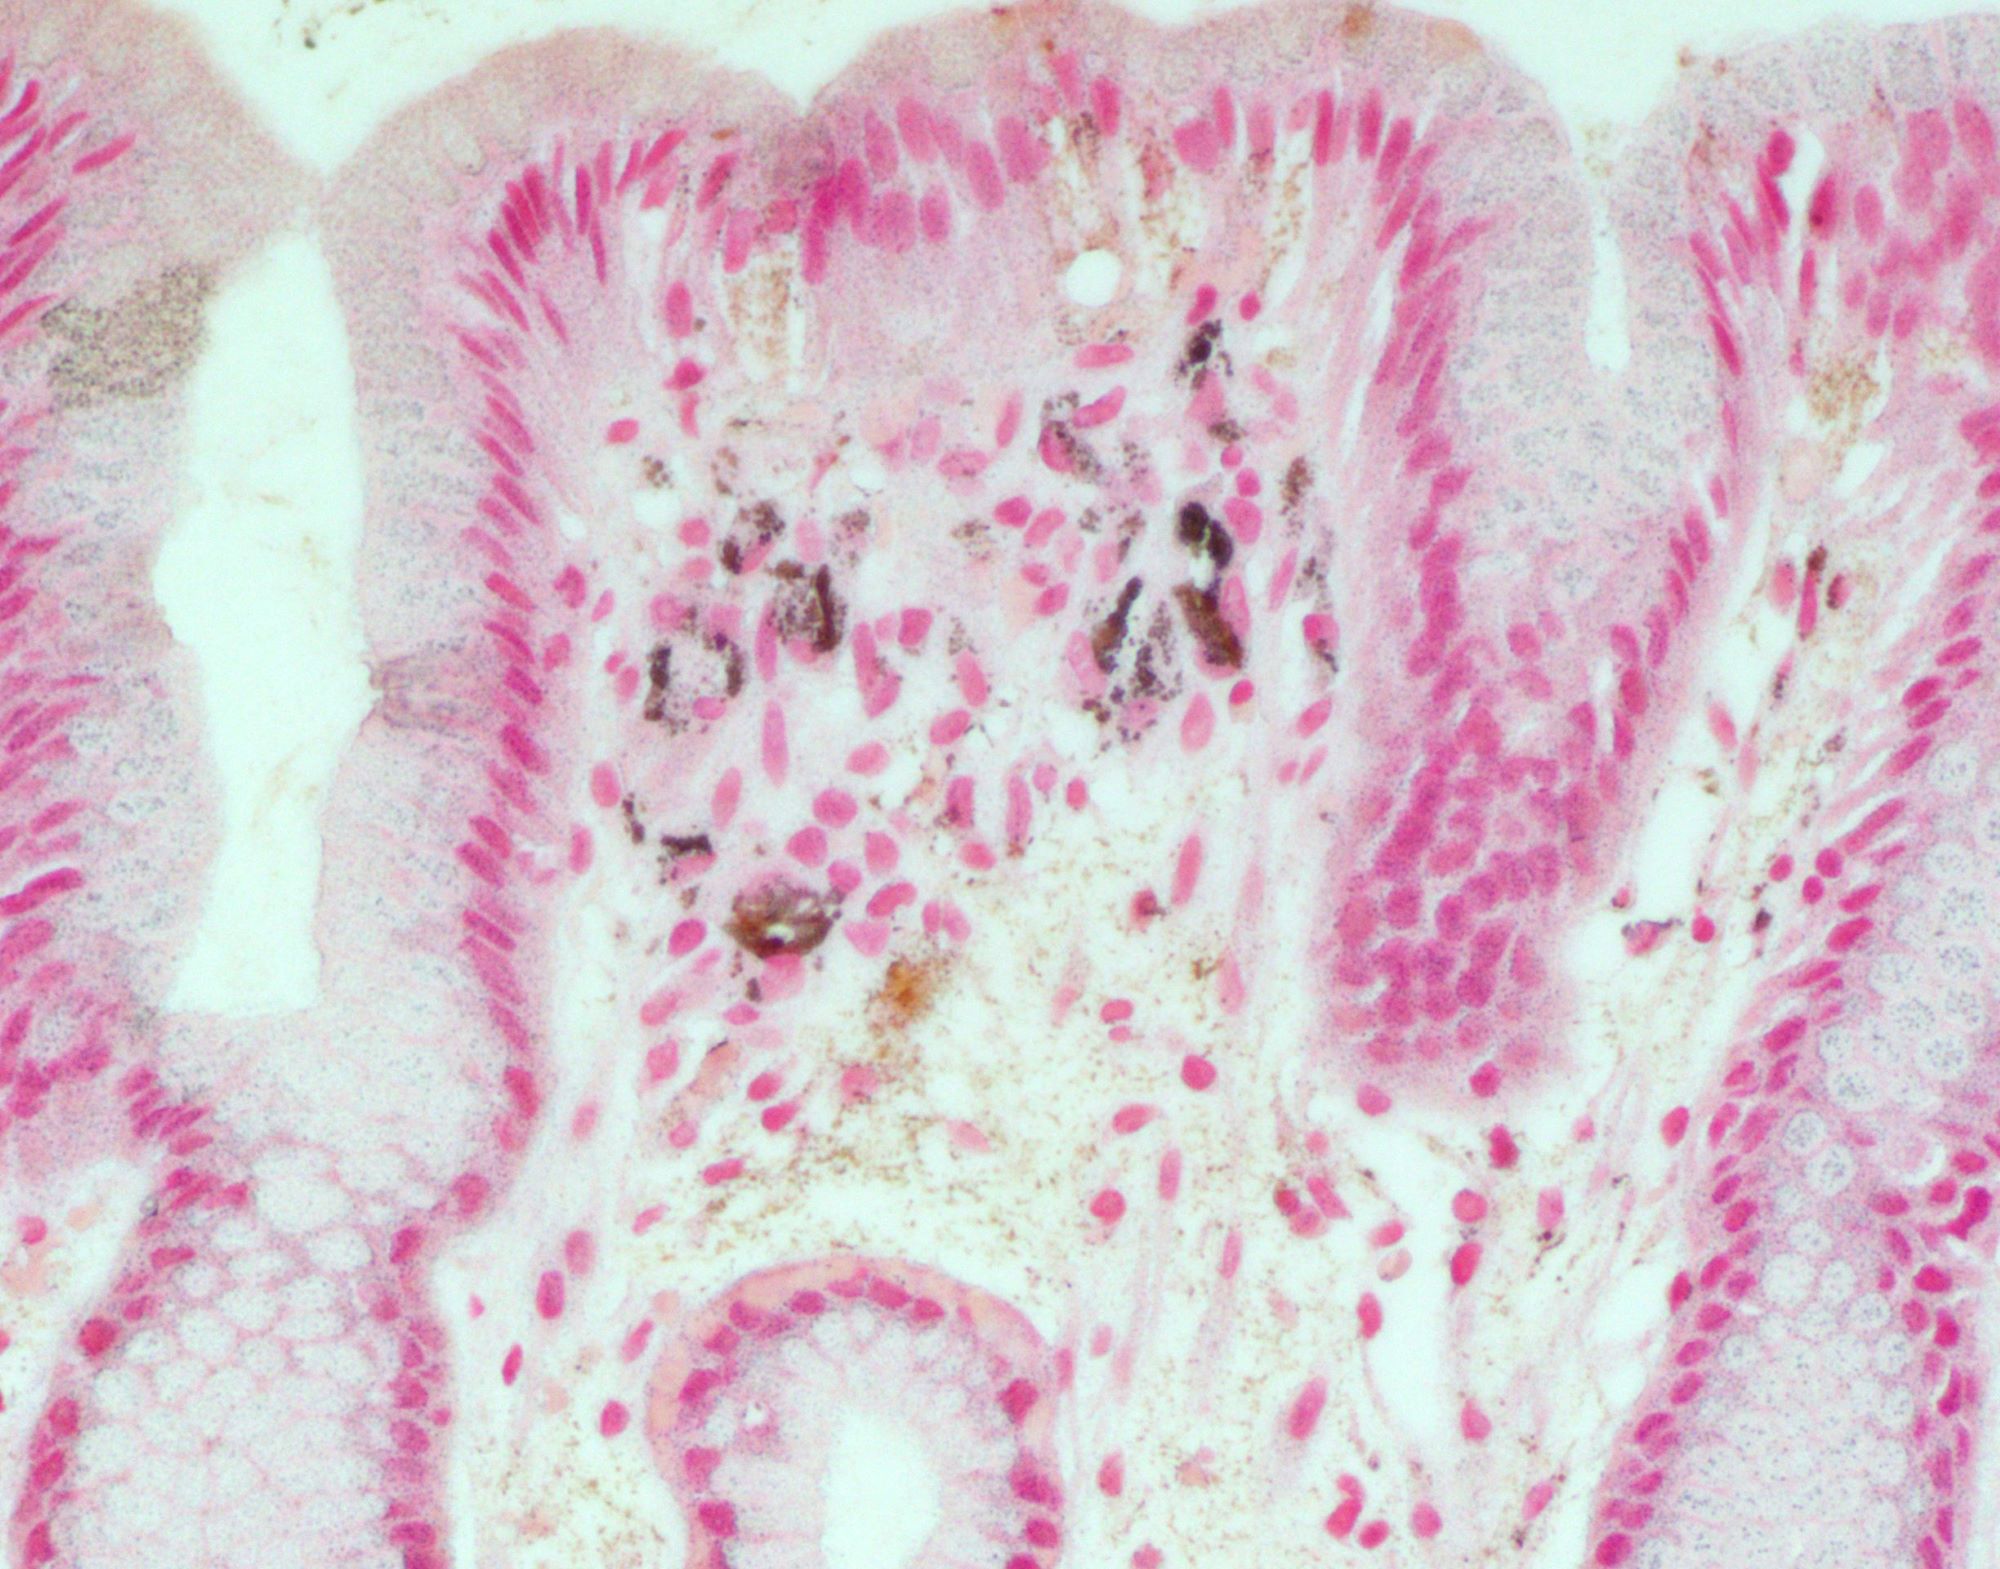 Mucosal calcinosis von Kossa stain